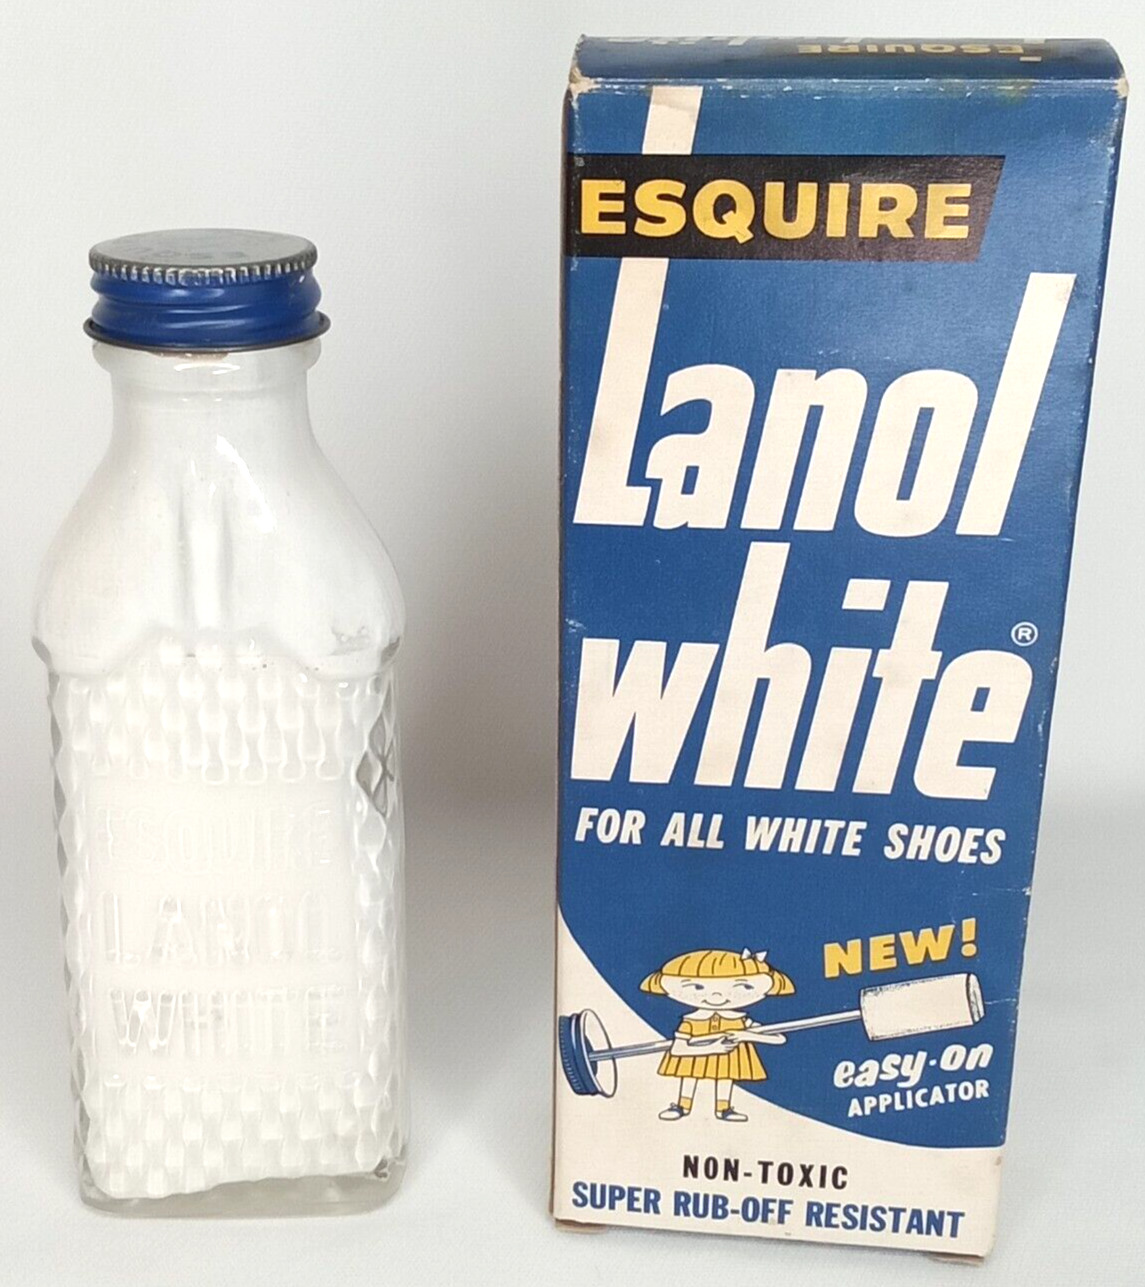 Esquire Lanol White Shoe Polish With Original Box & Glass Bottle 1940s Old Stock